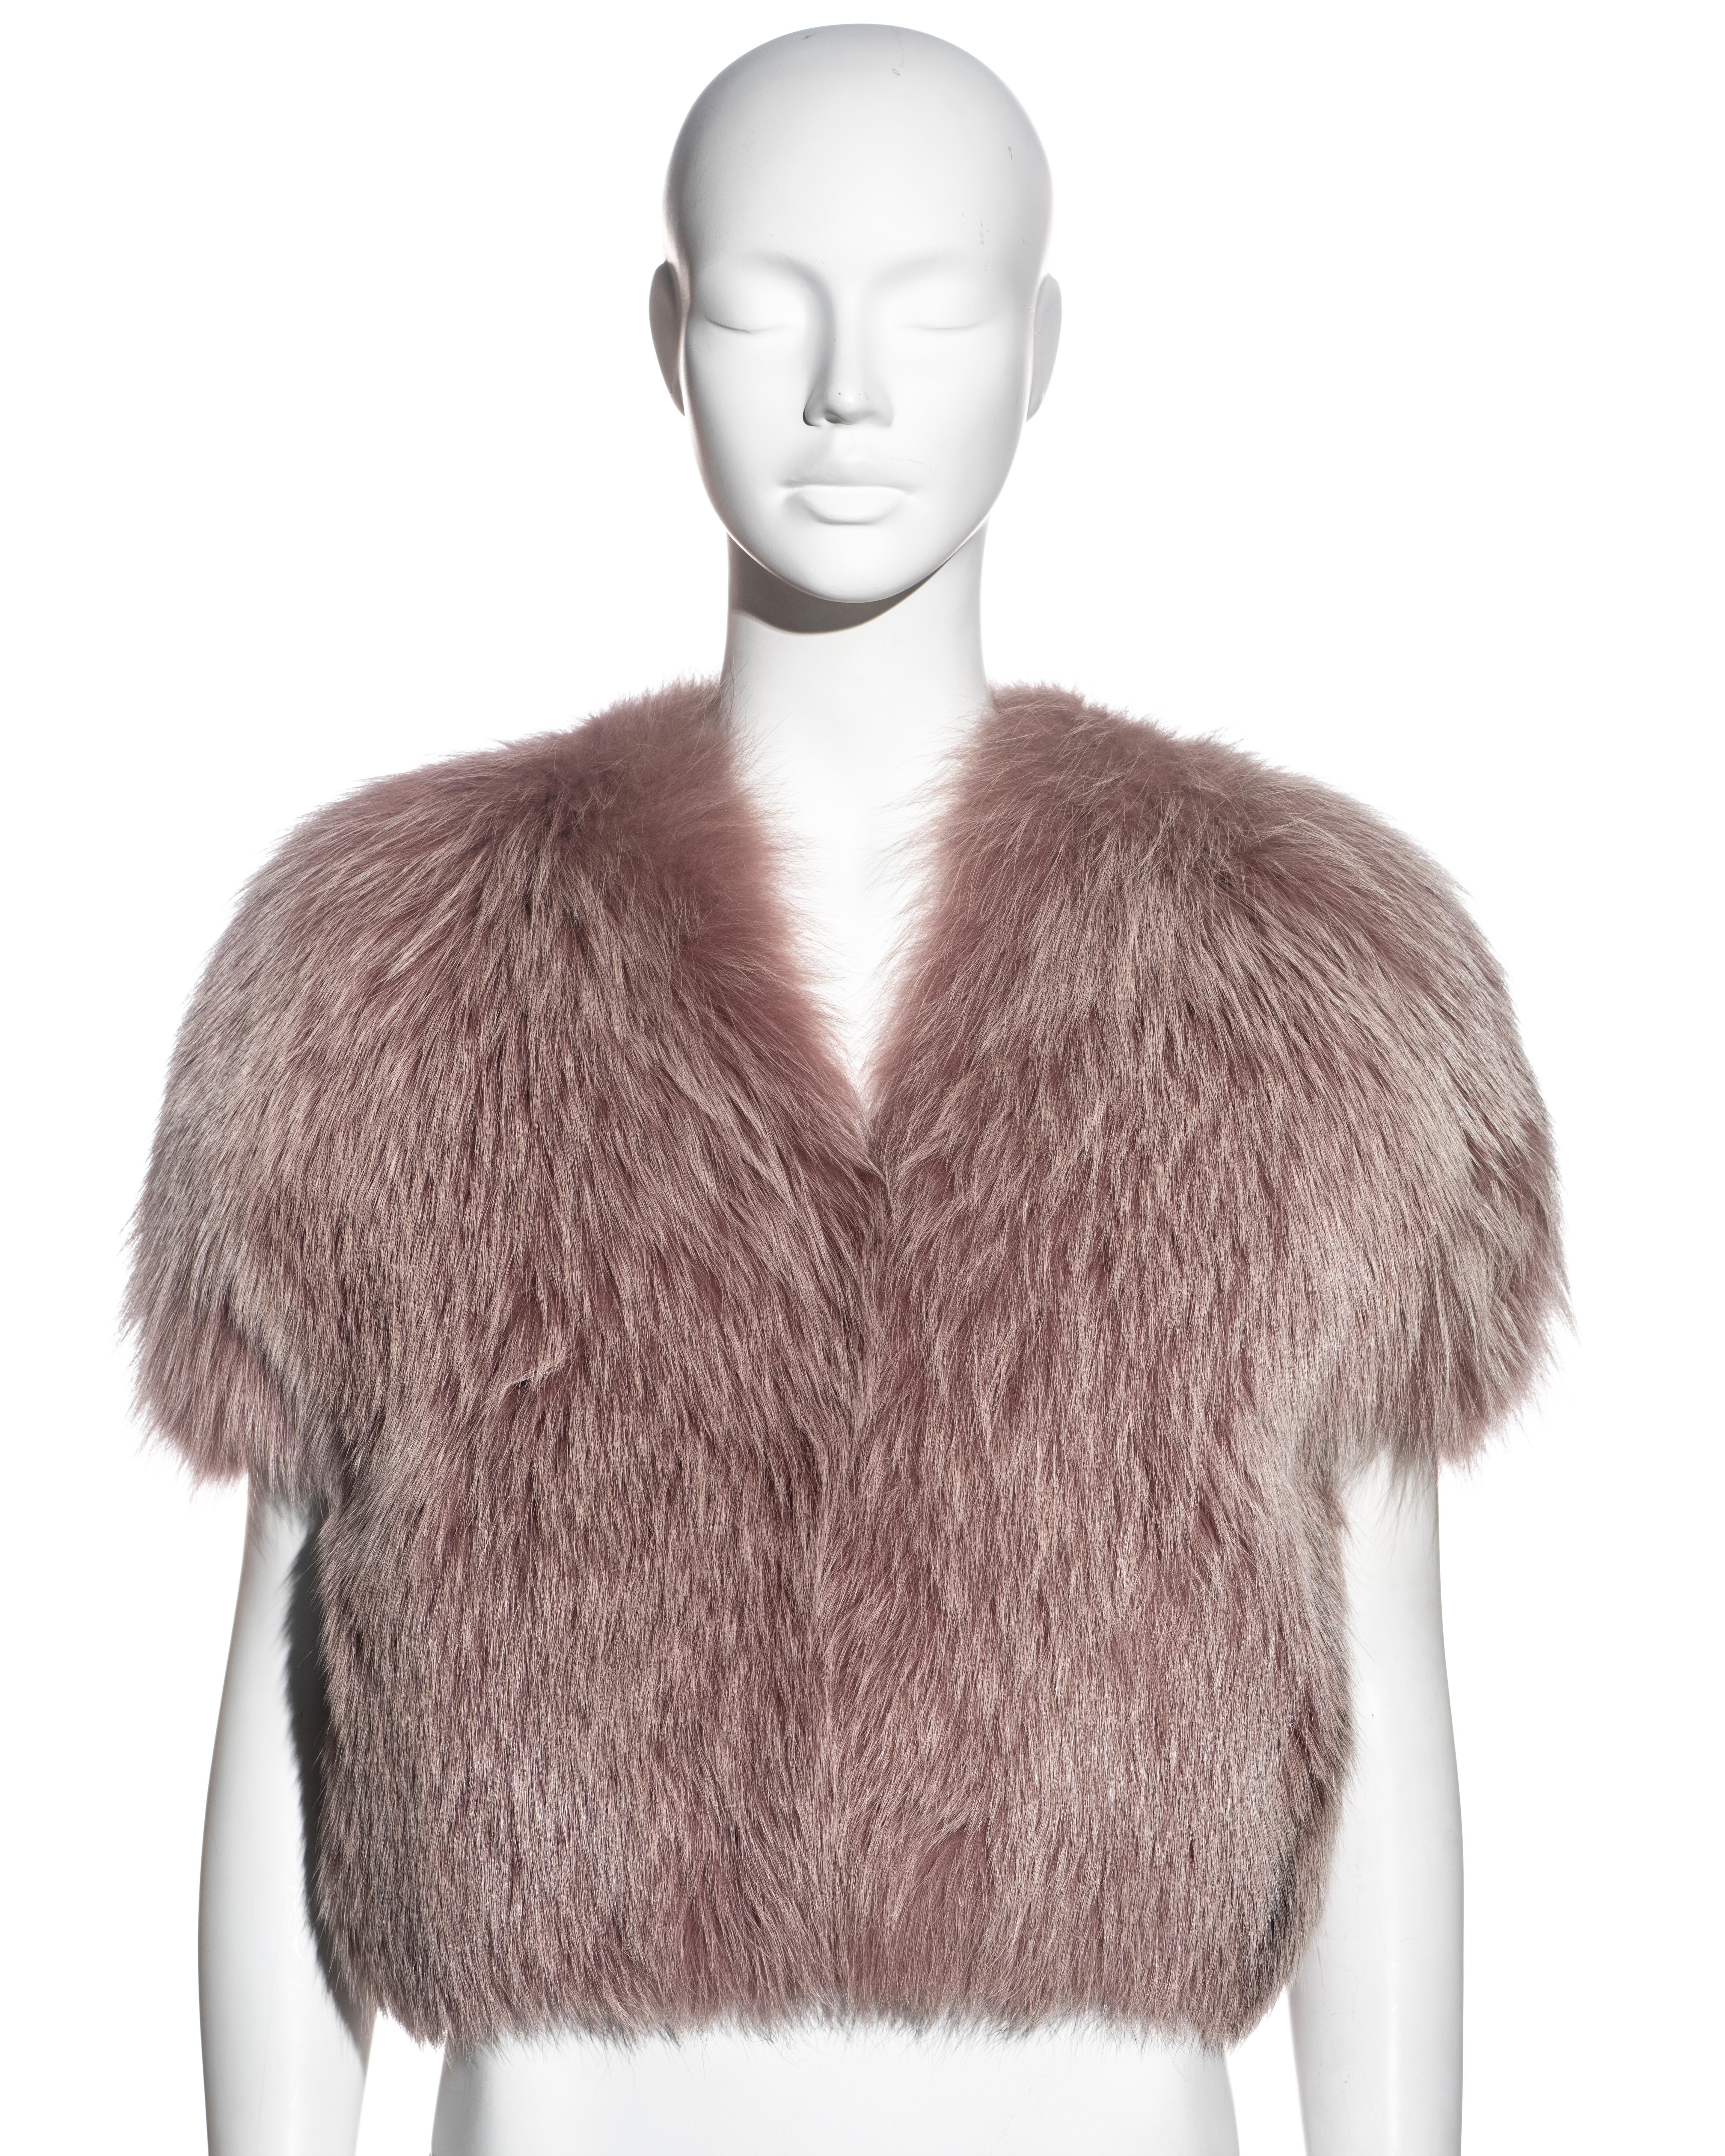 Vuitton Fur - 28 For Sale on 1stDibs